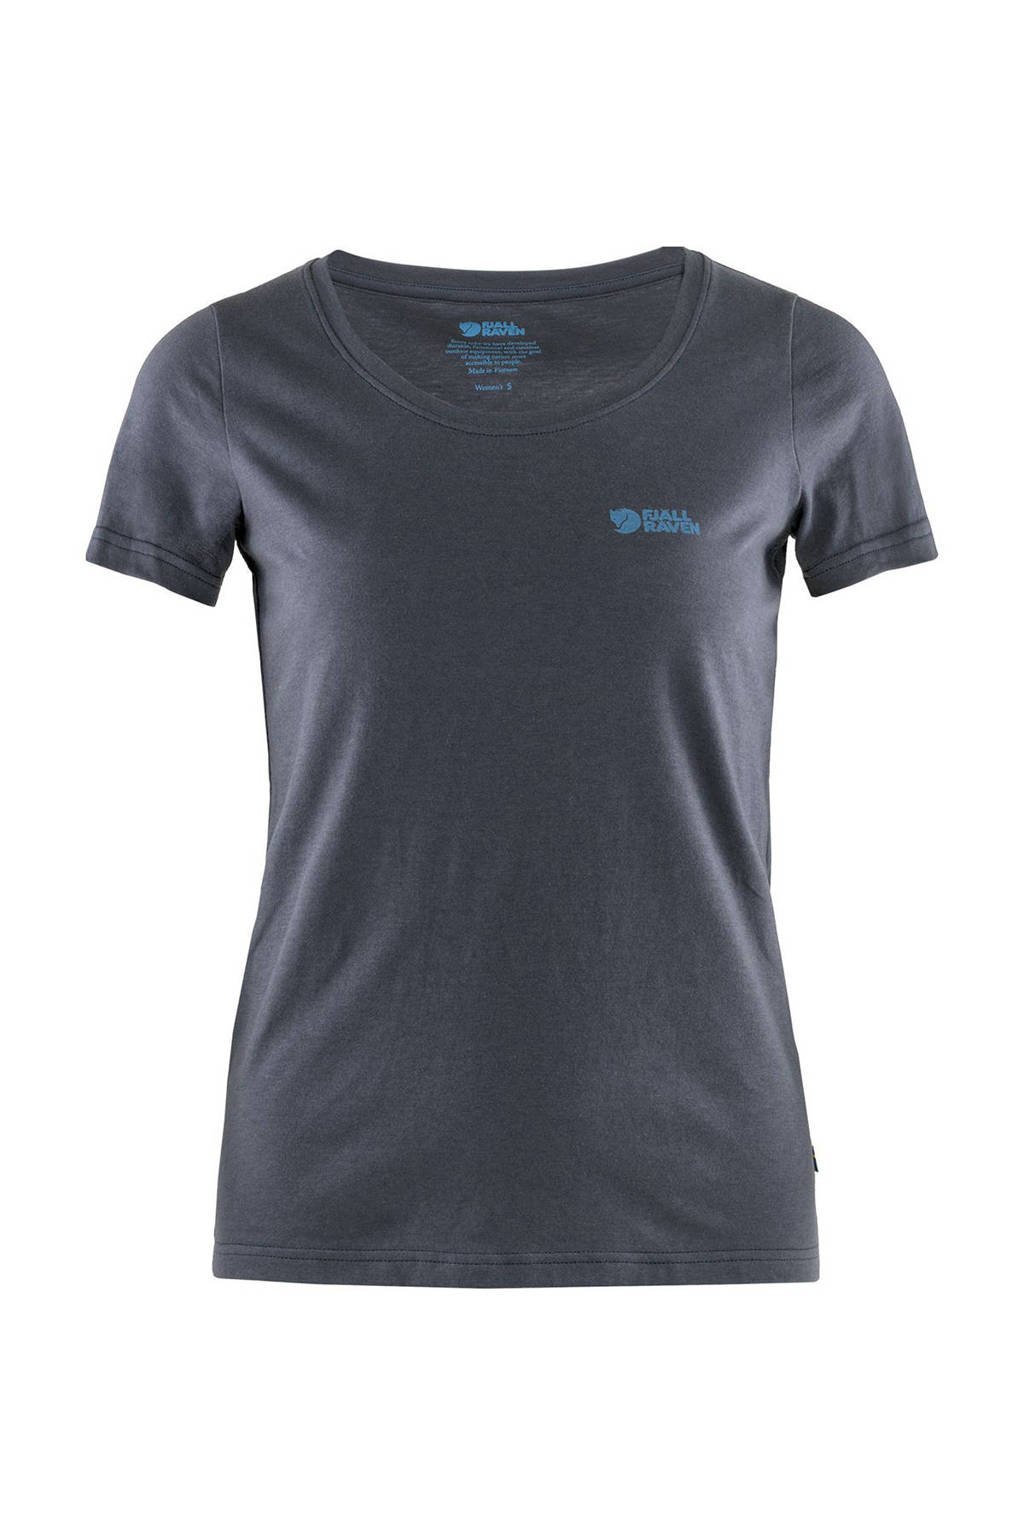 Fjällräven outdoor T-shirt donkerblauw